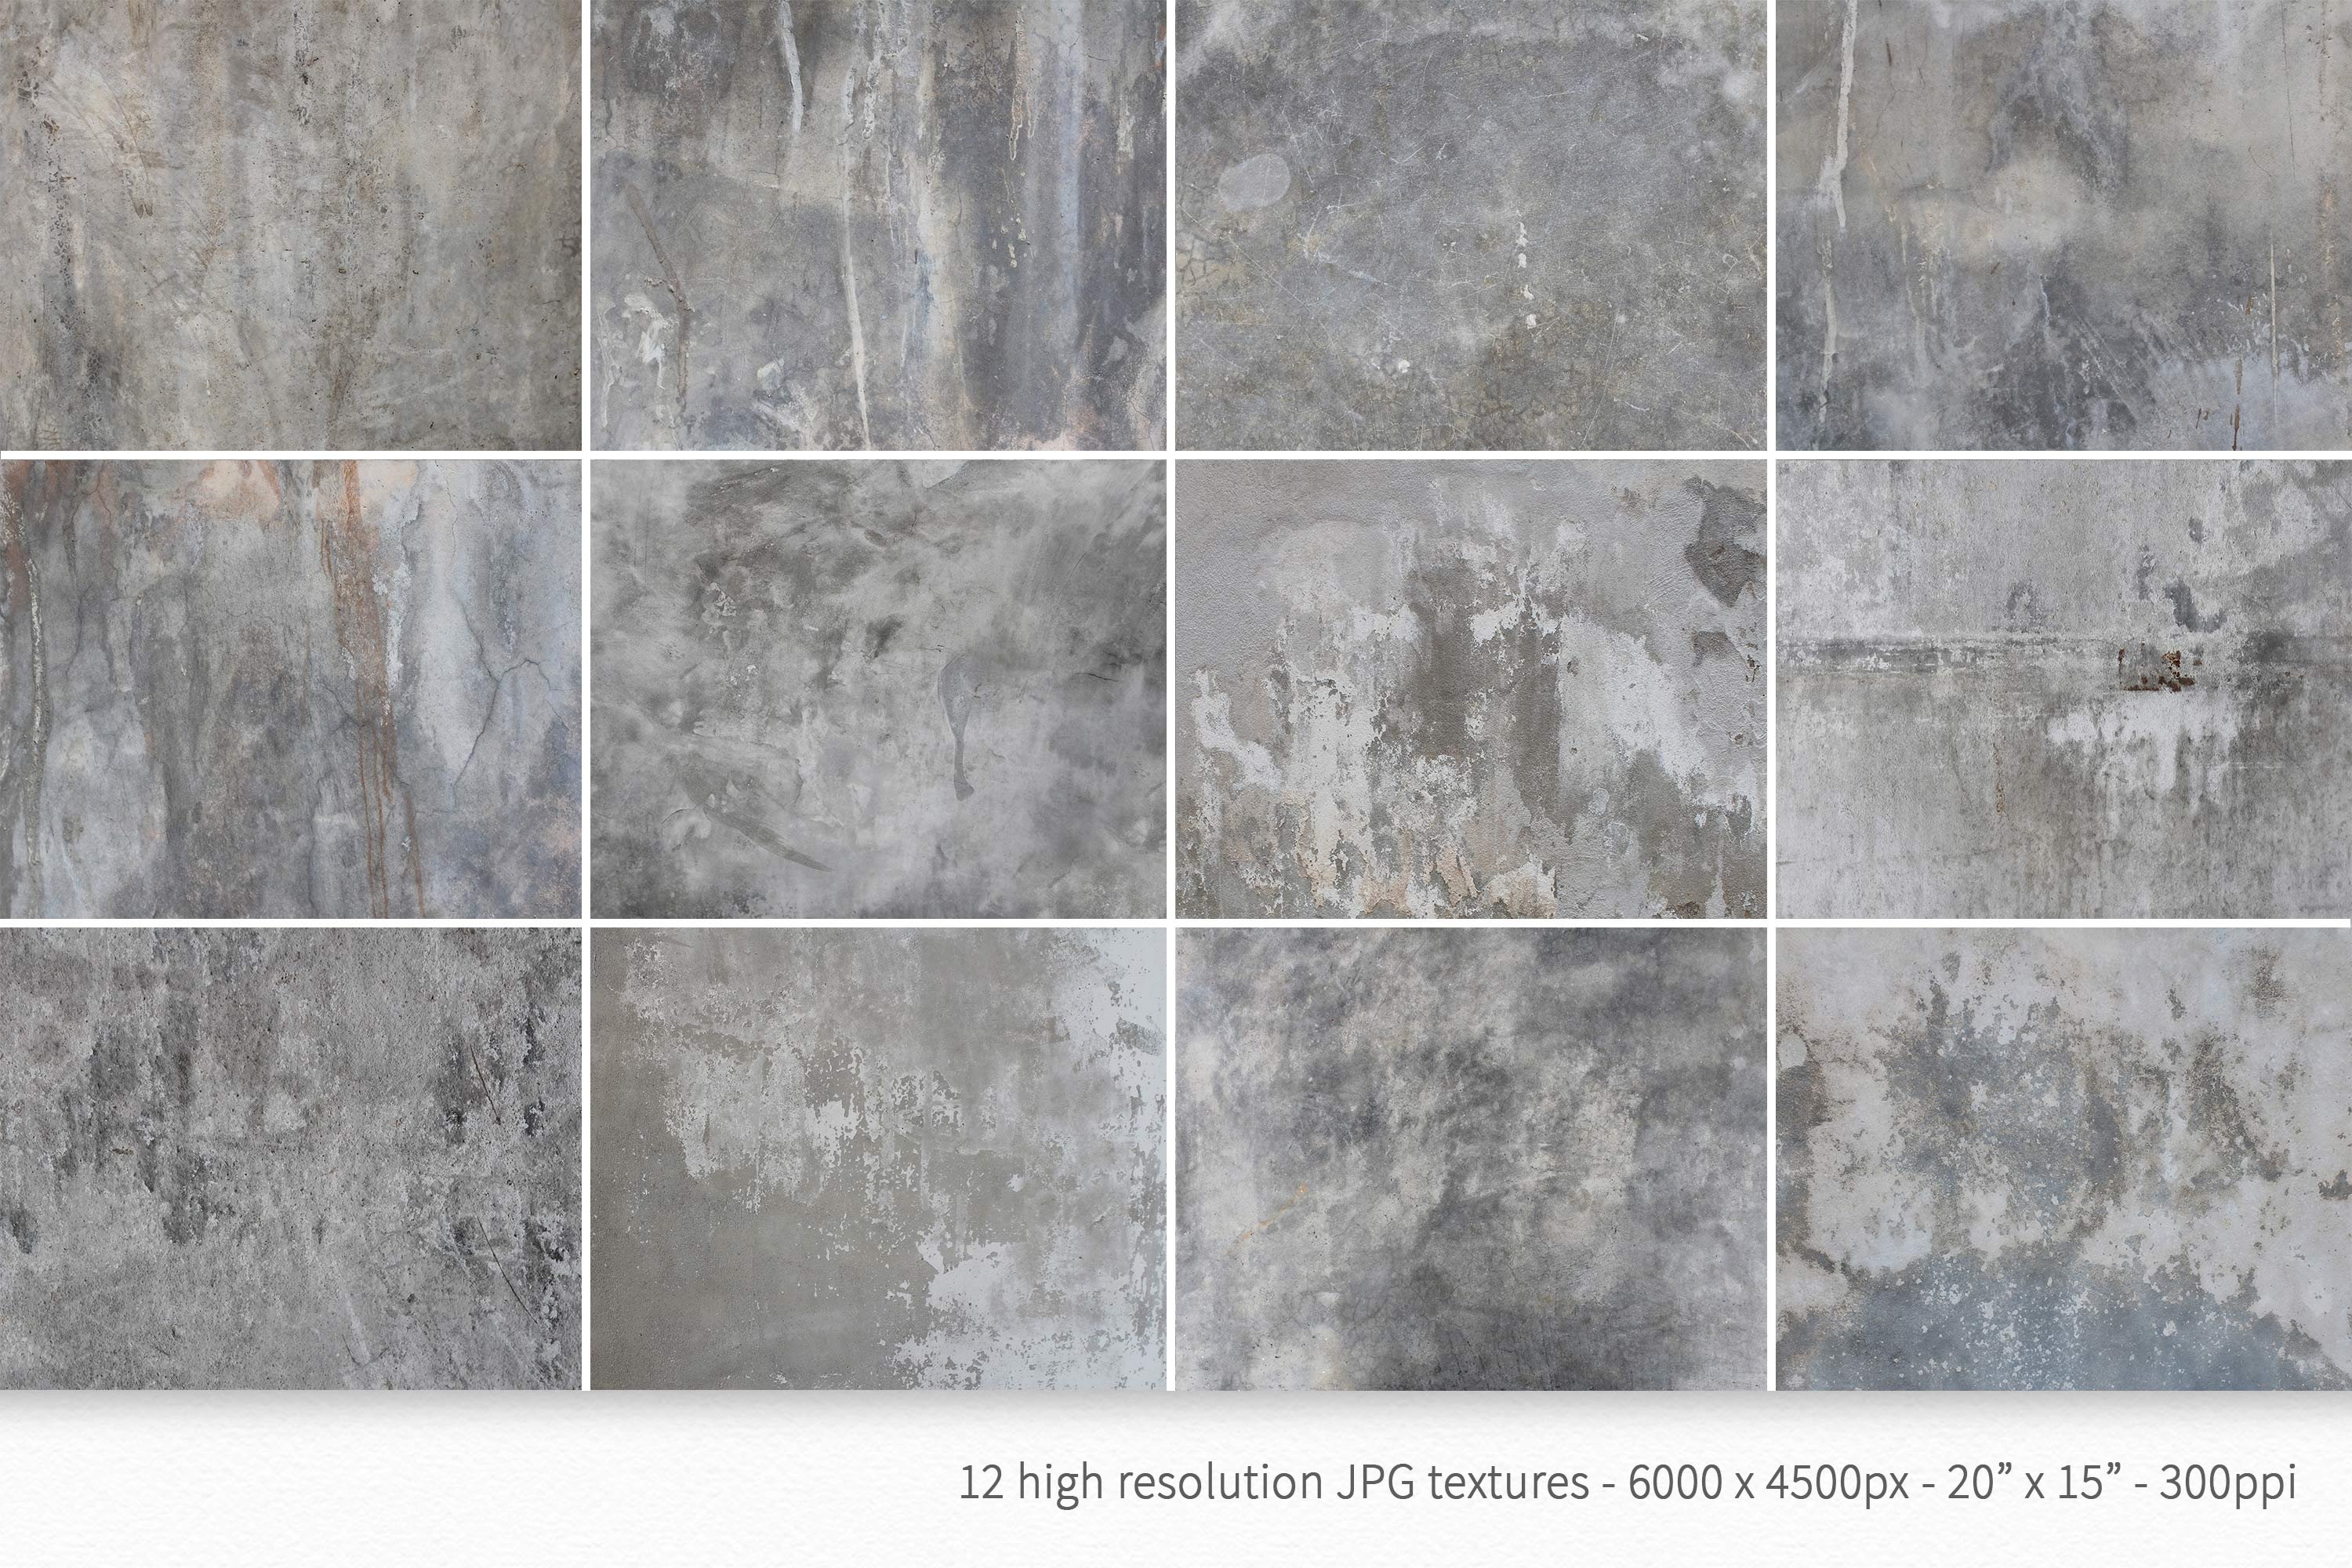 Grungy Concrete Textures preview image.